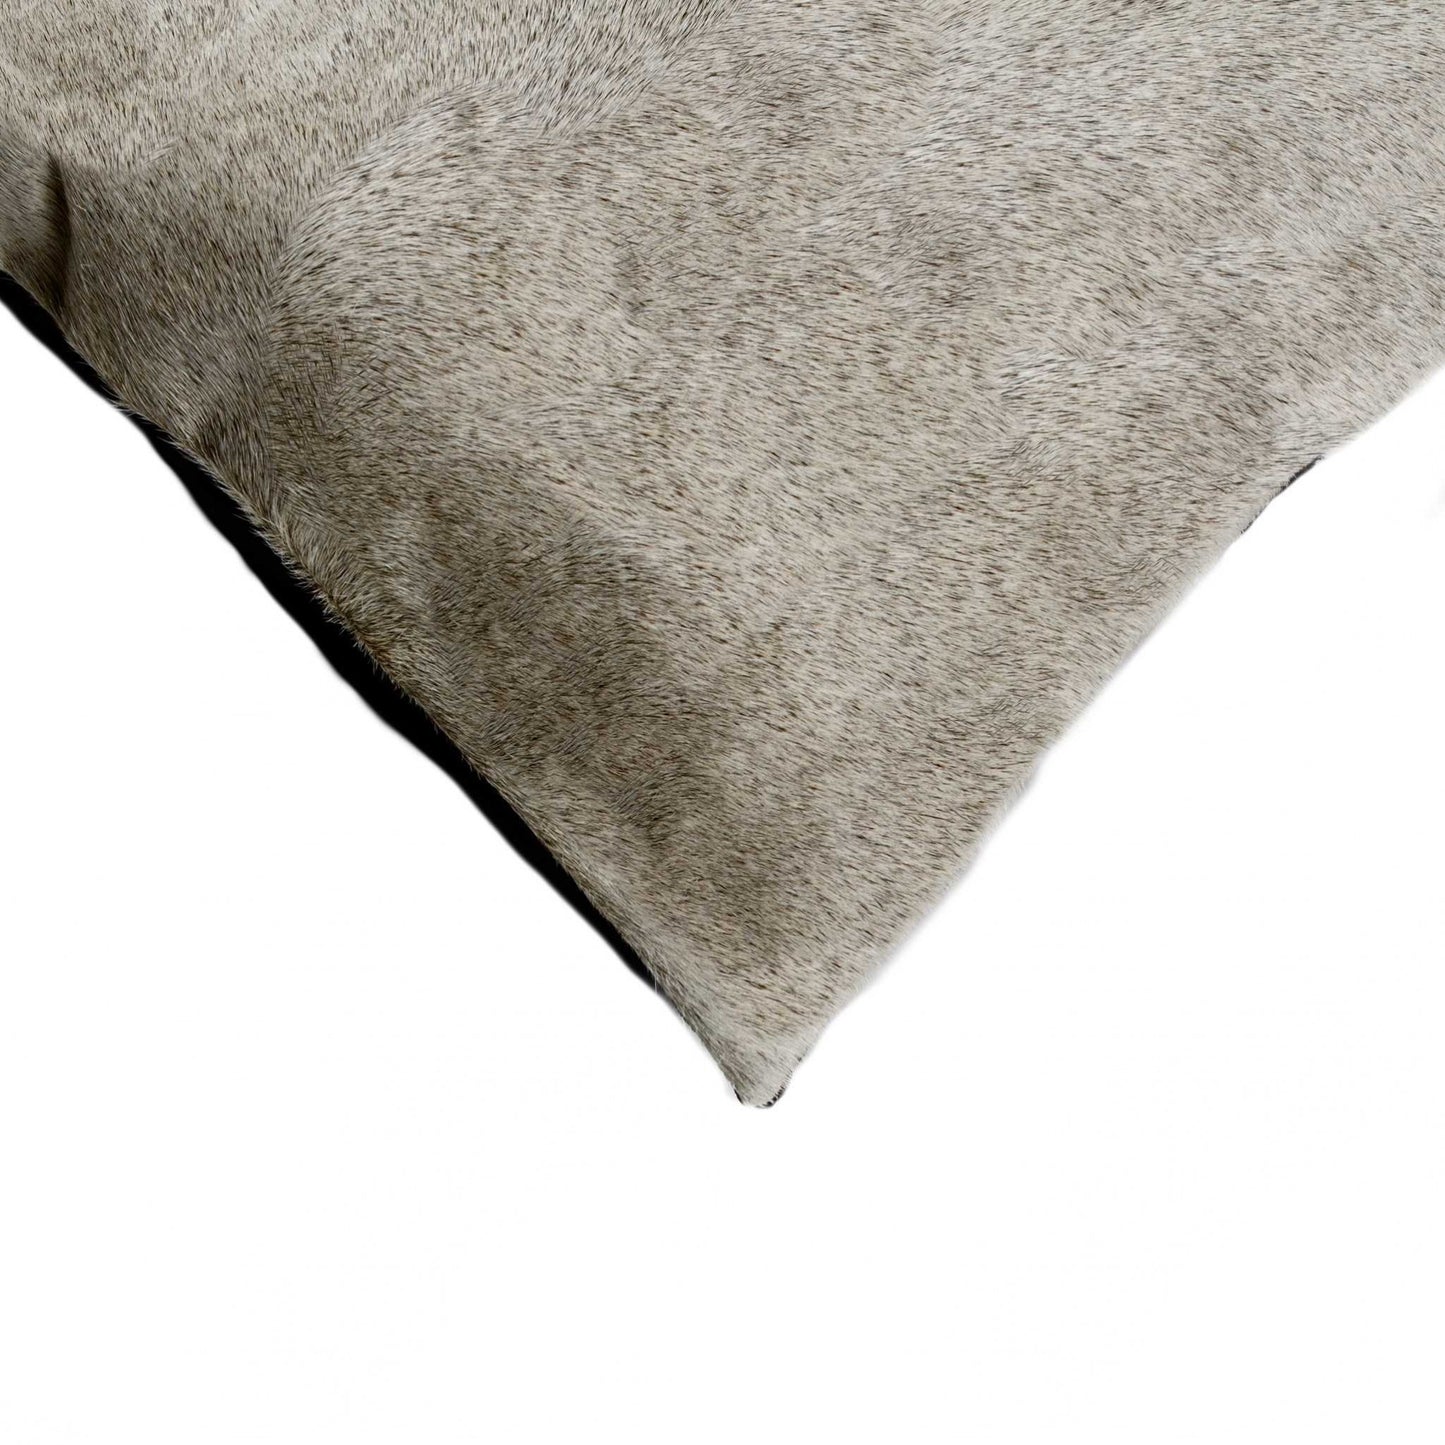 12" X 20" Gray Cowhide Pillow